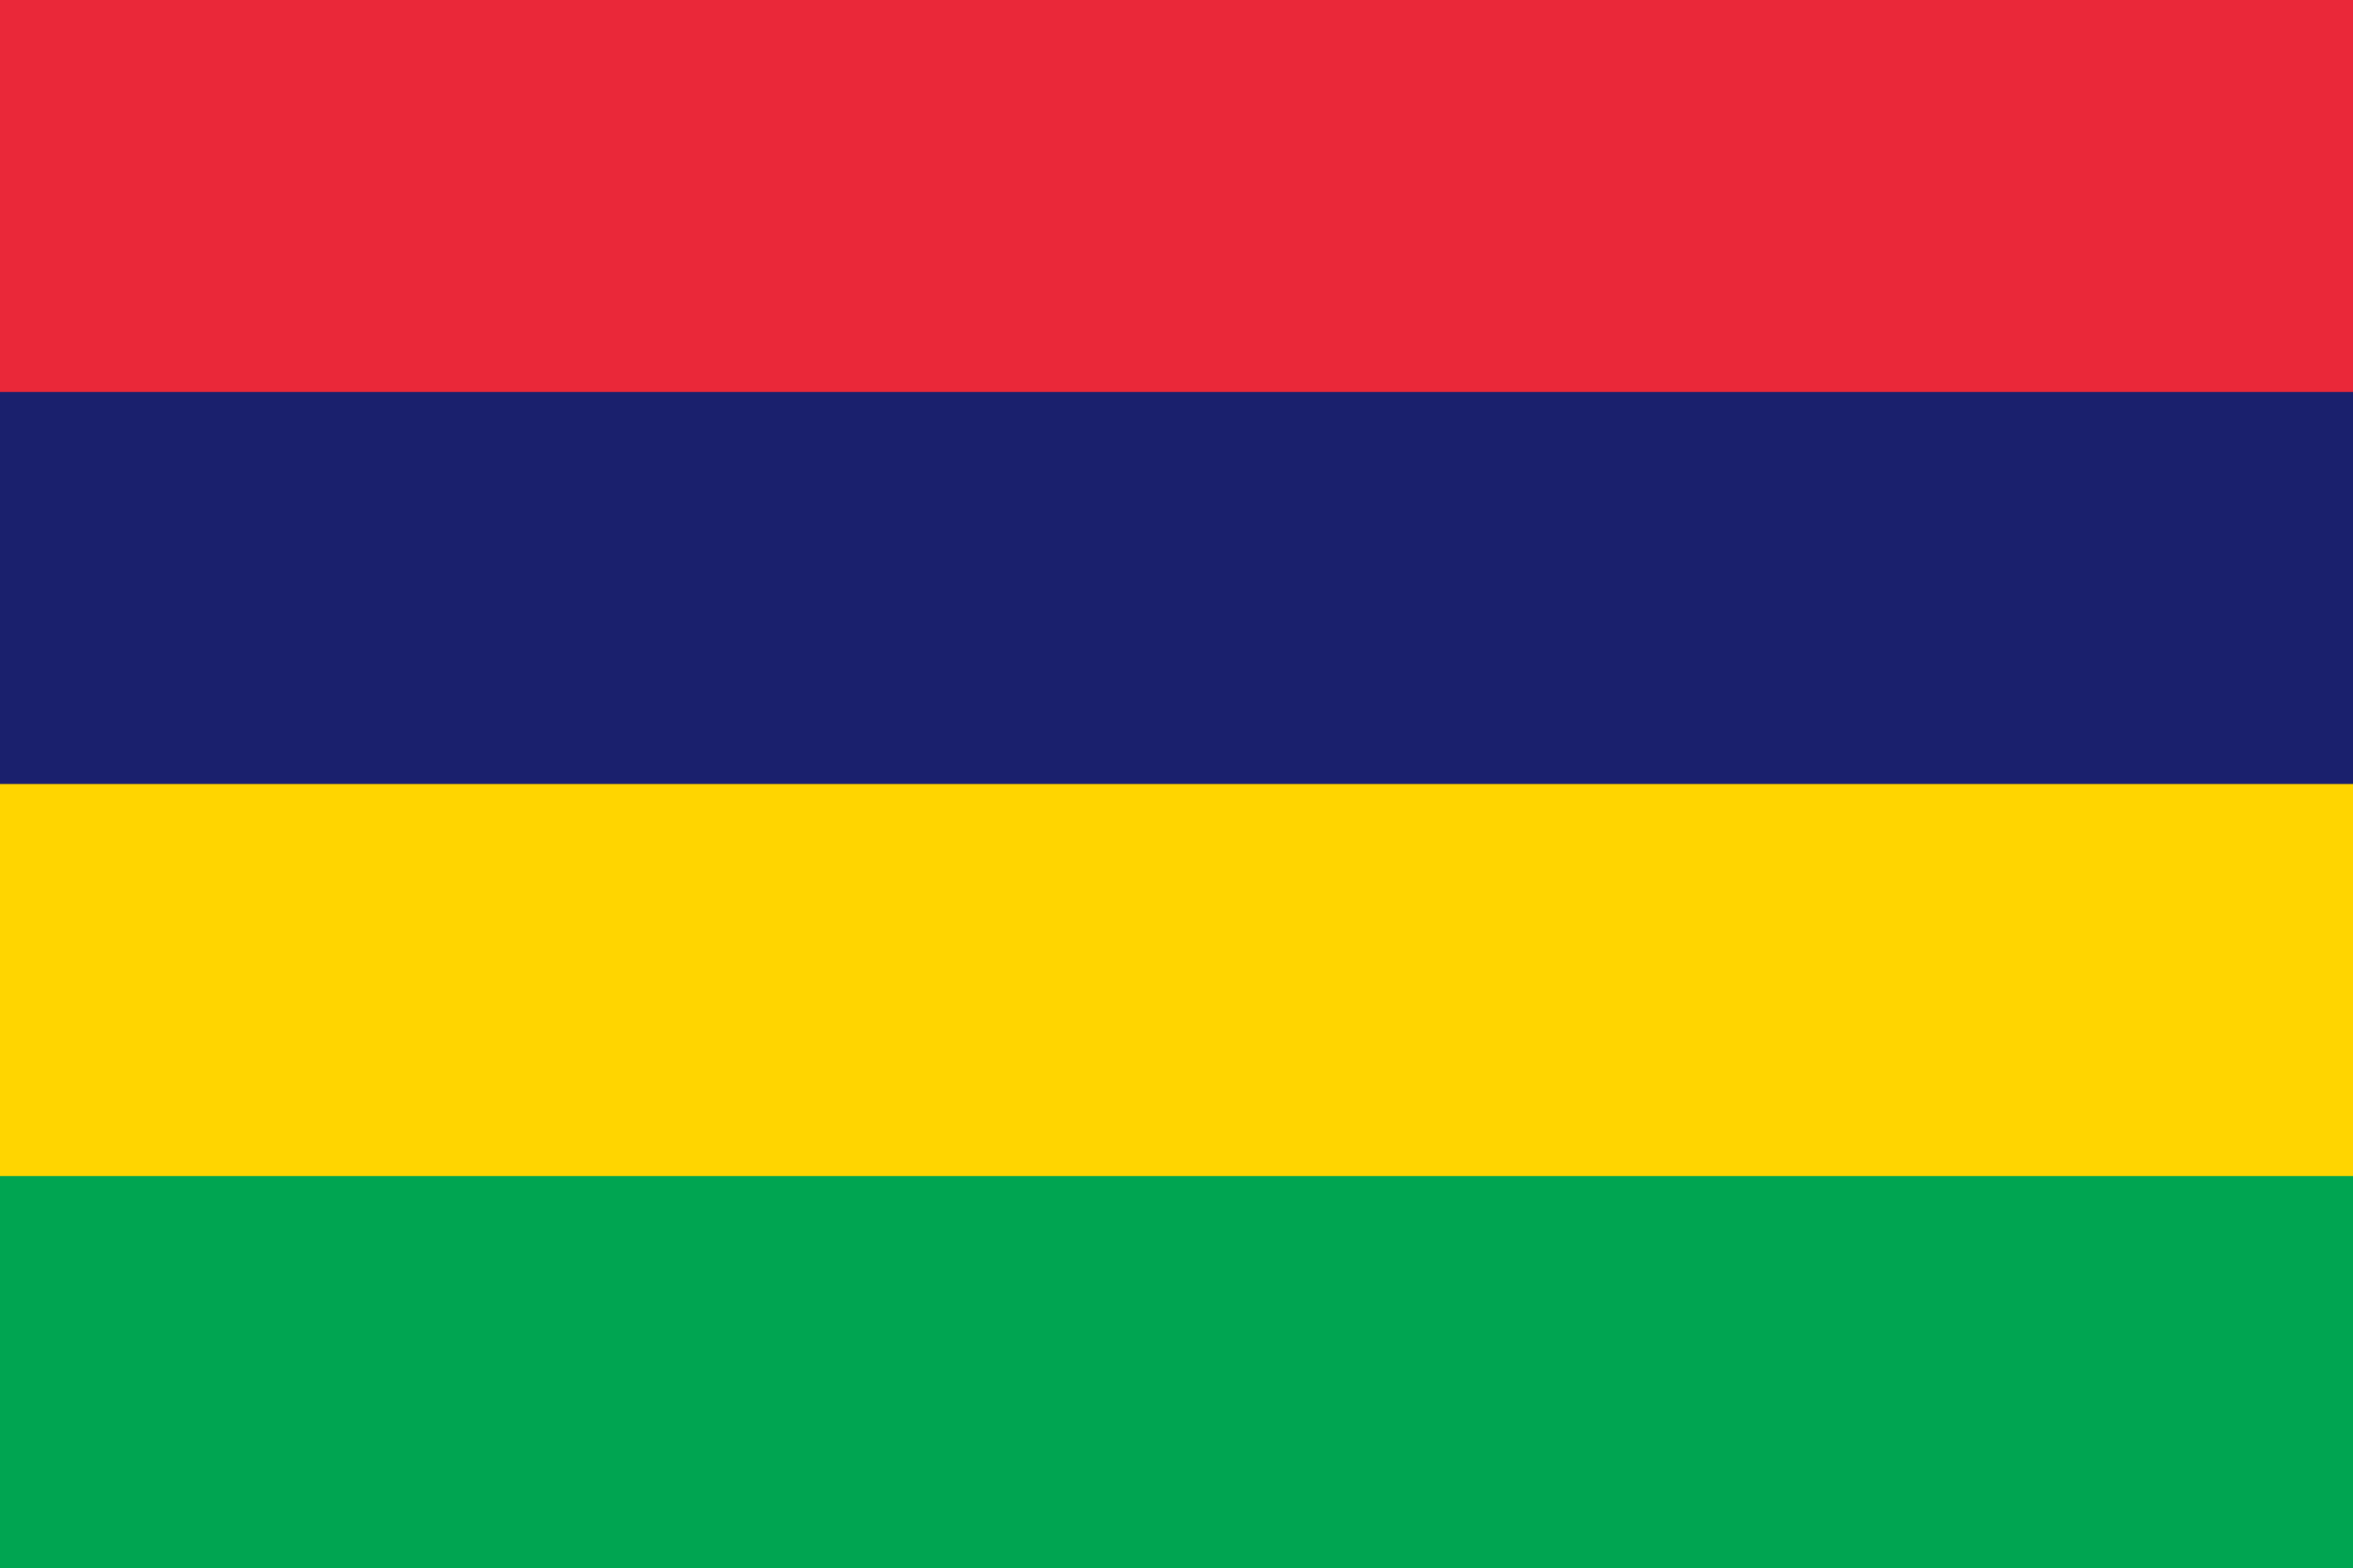 Free Mauritius Flag Documents: PDF, DOC, DOCX, HTML & More!